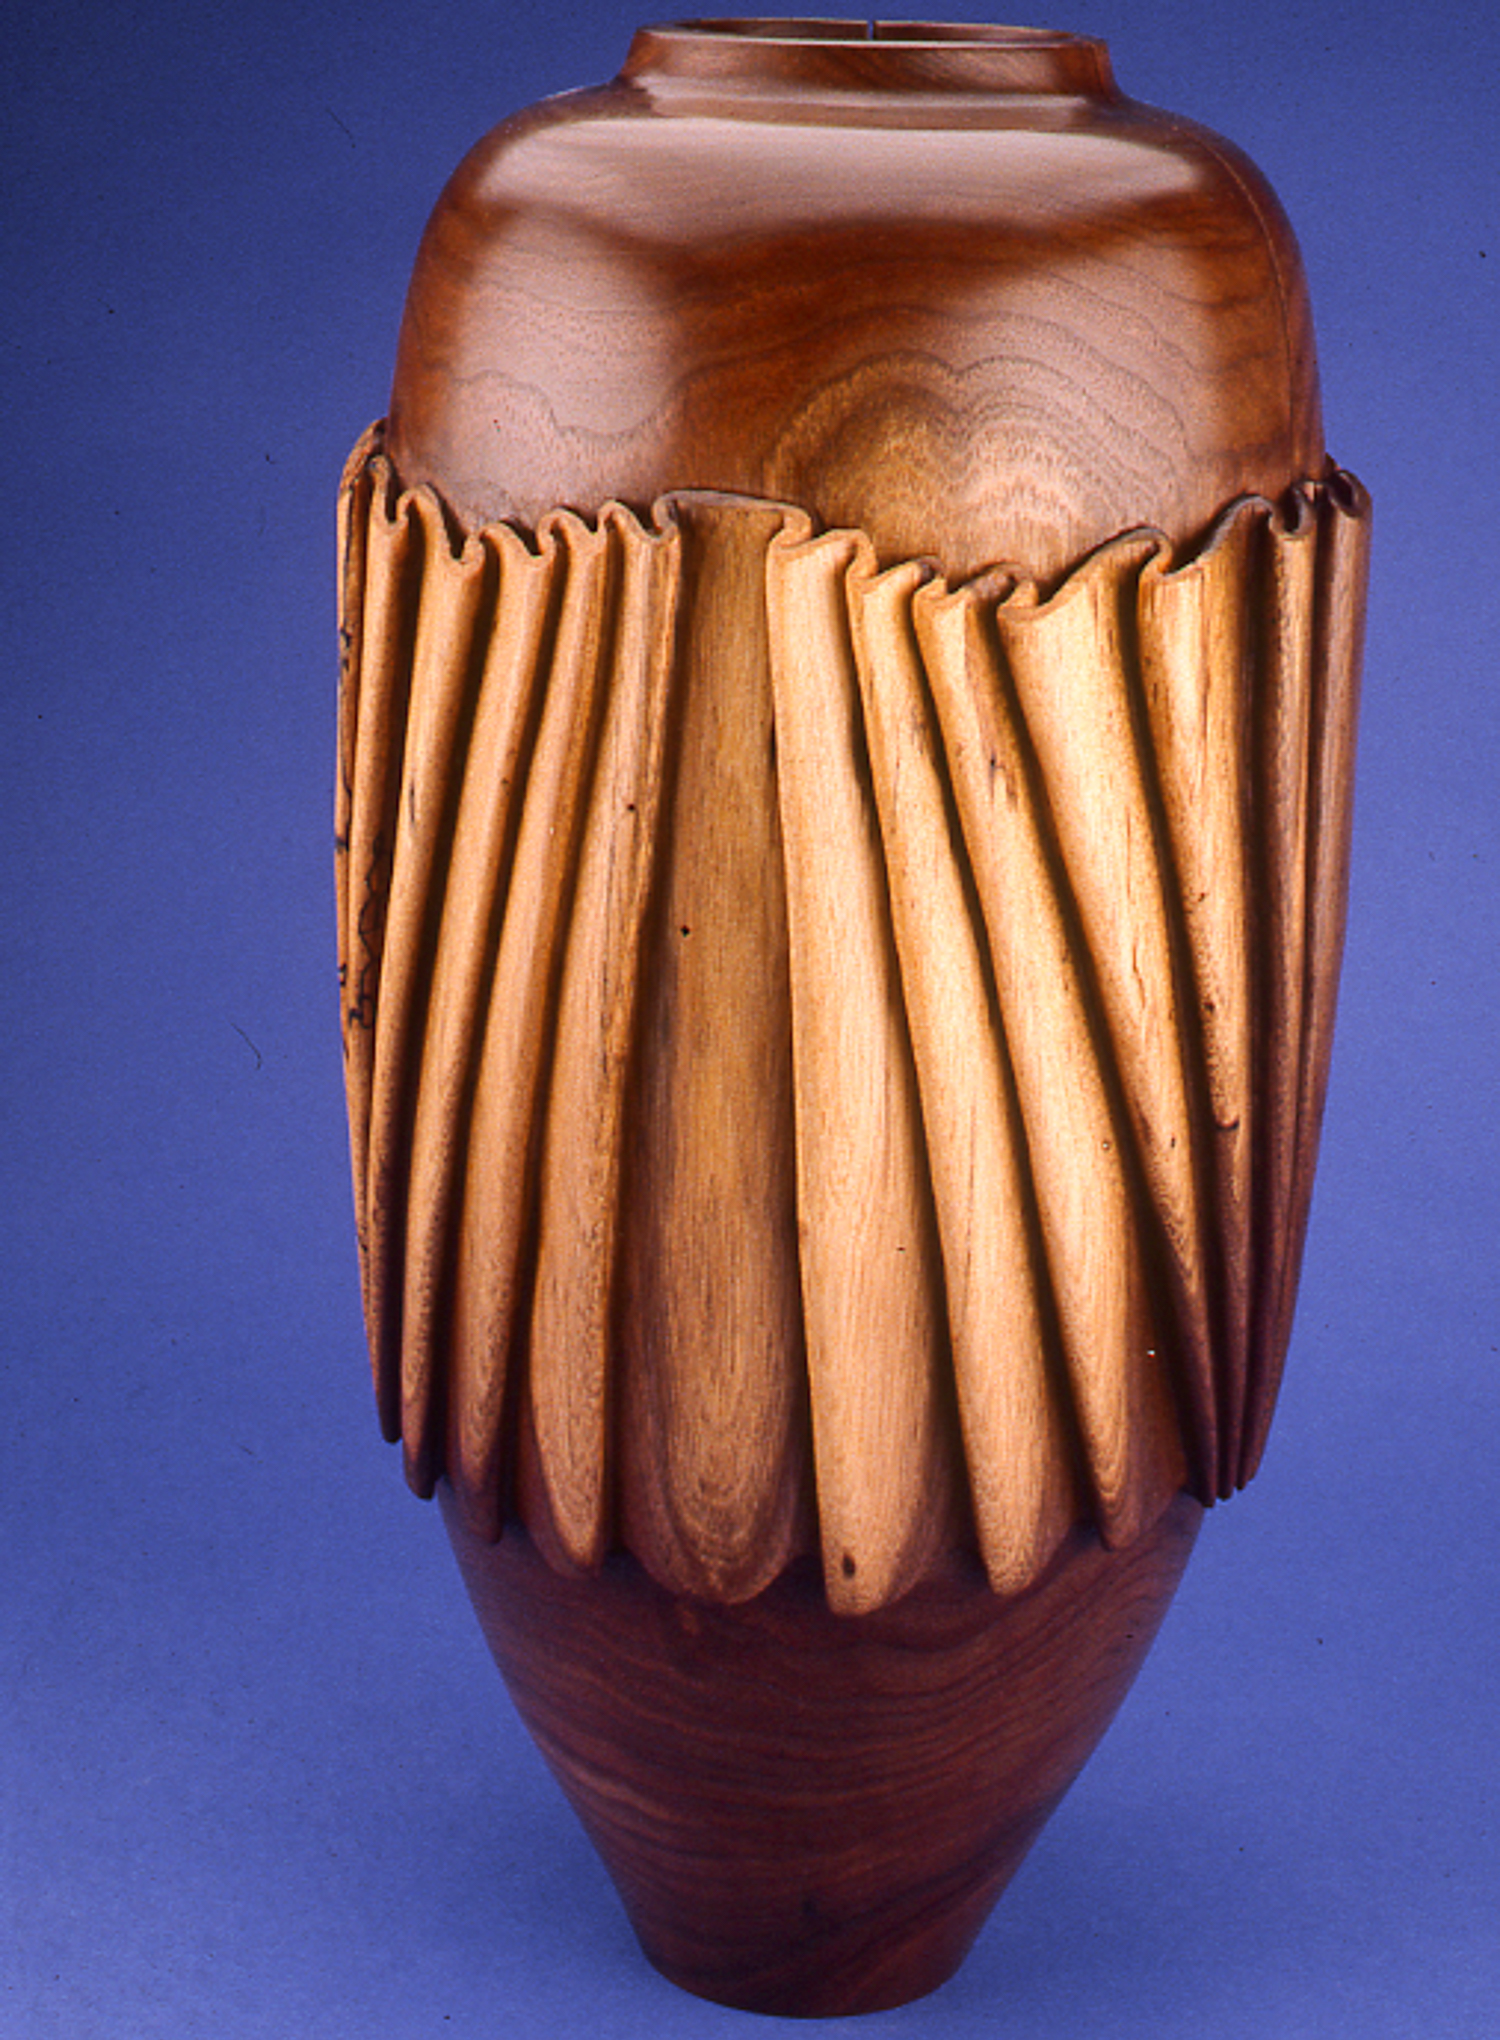 Linenfold Vase #2, 1989